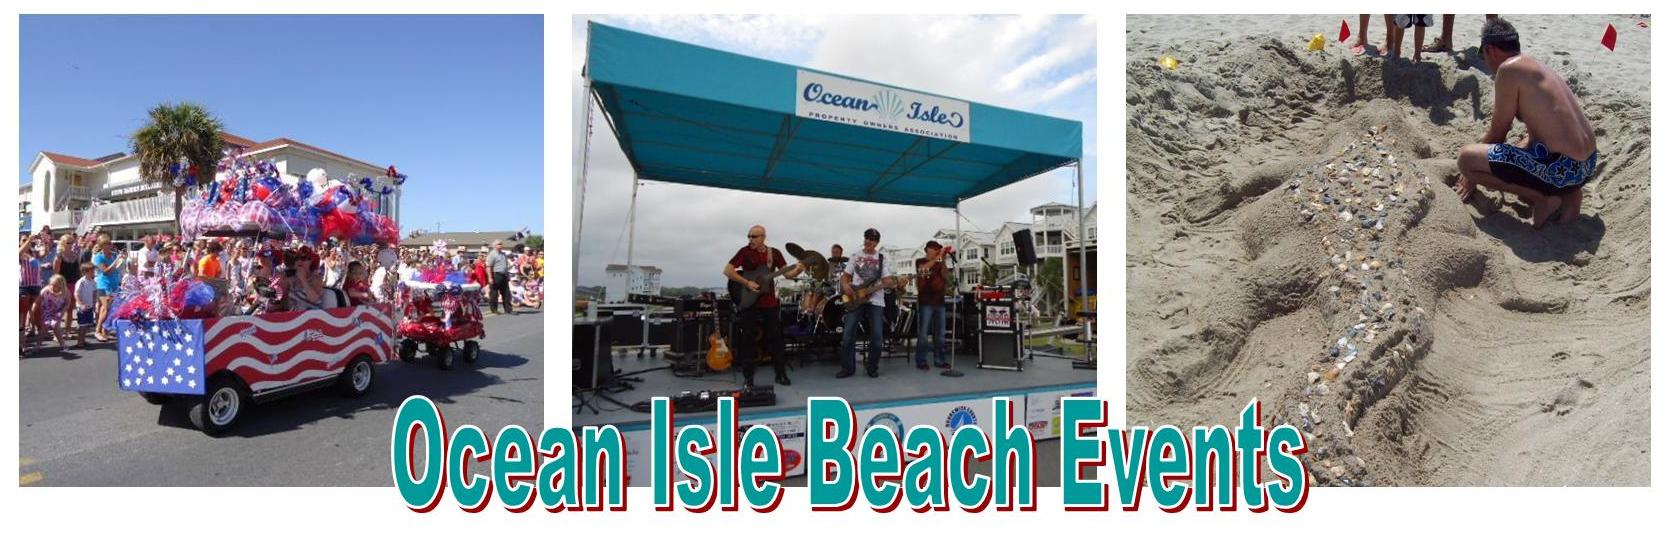 Ocean Isle Beach Events